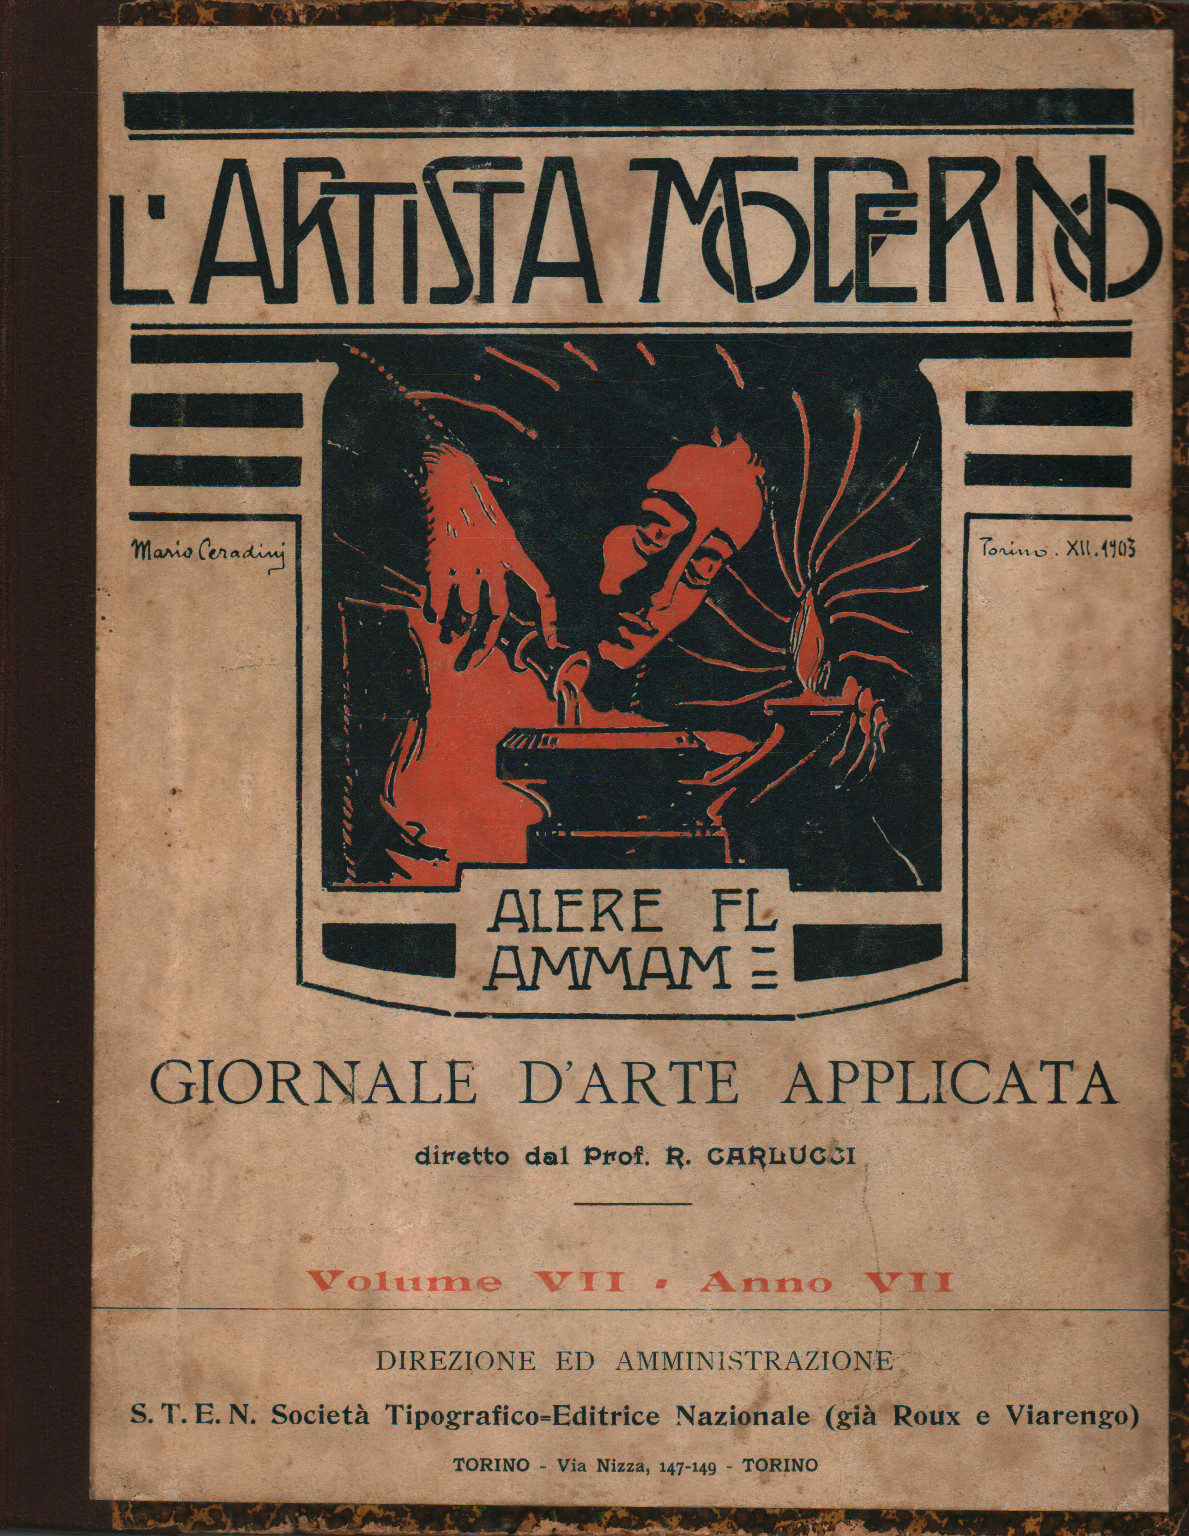 L artista moderno Vol. VII Anno VII 1908, s.a.